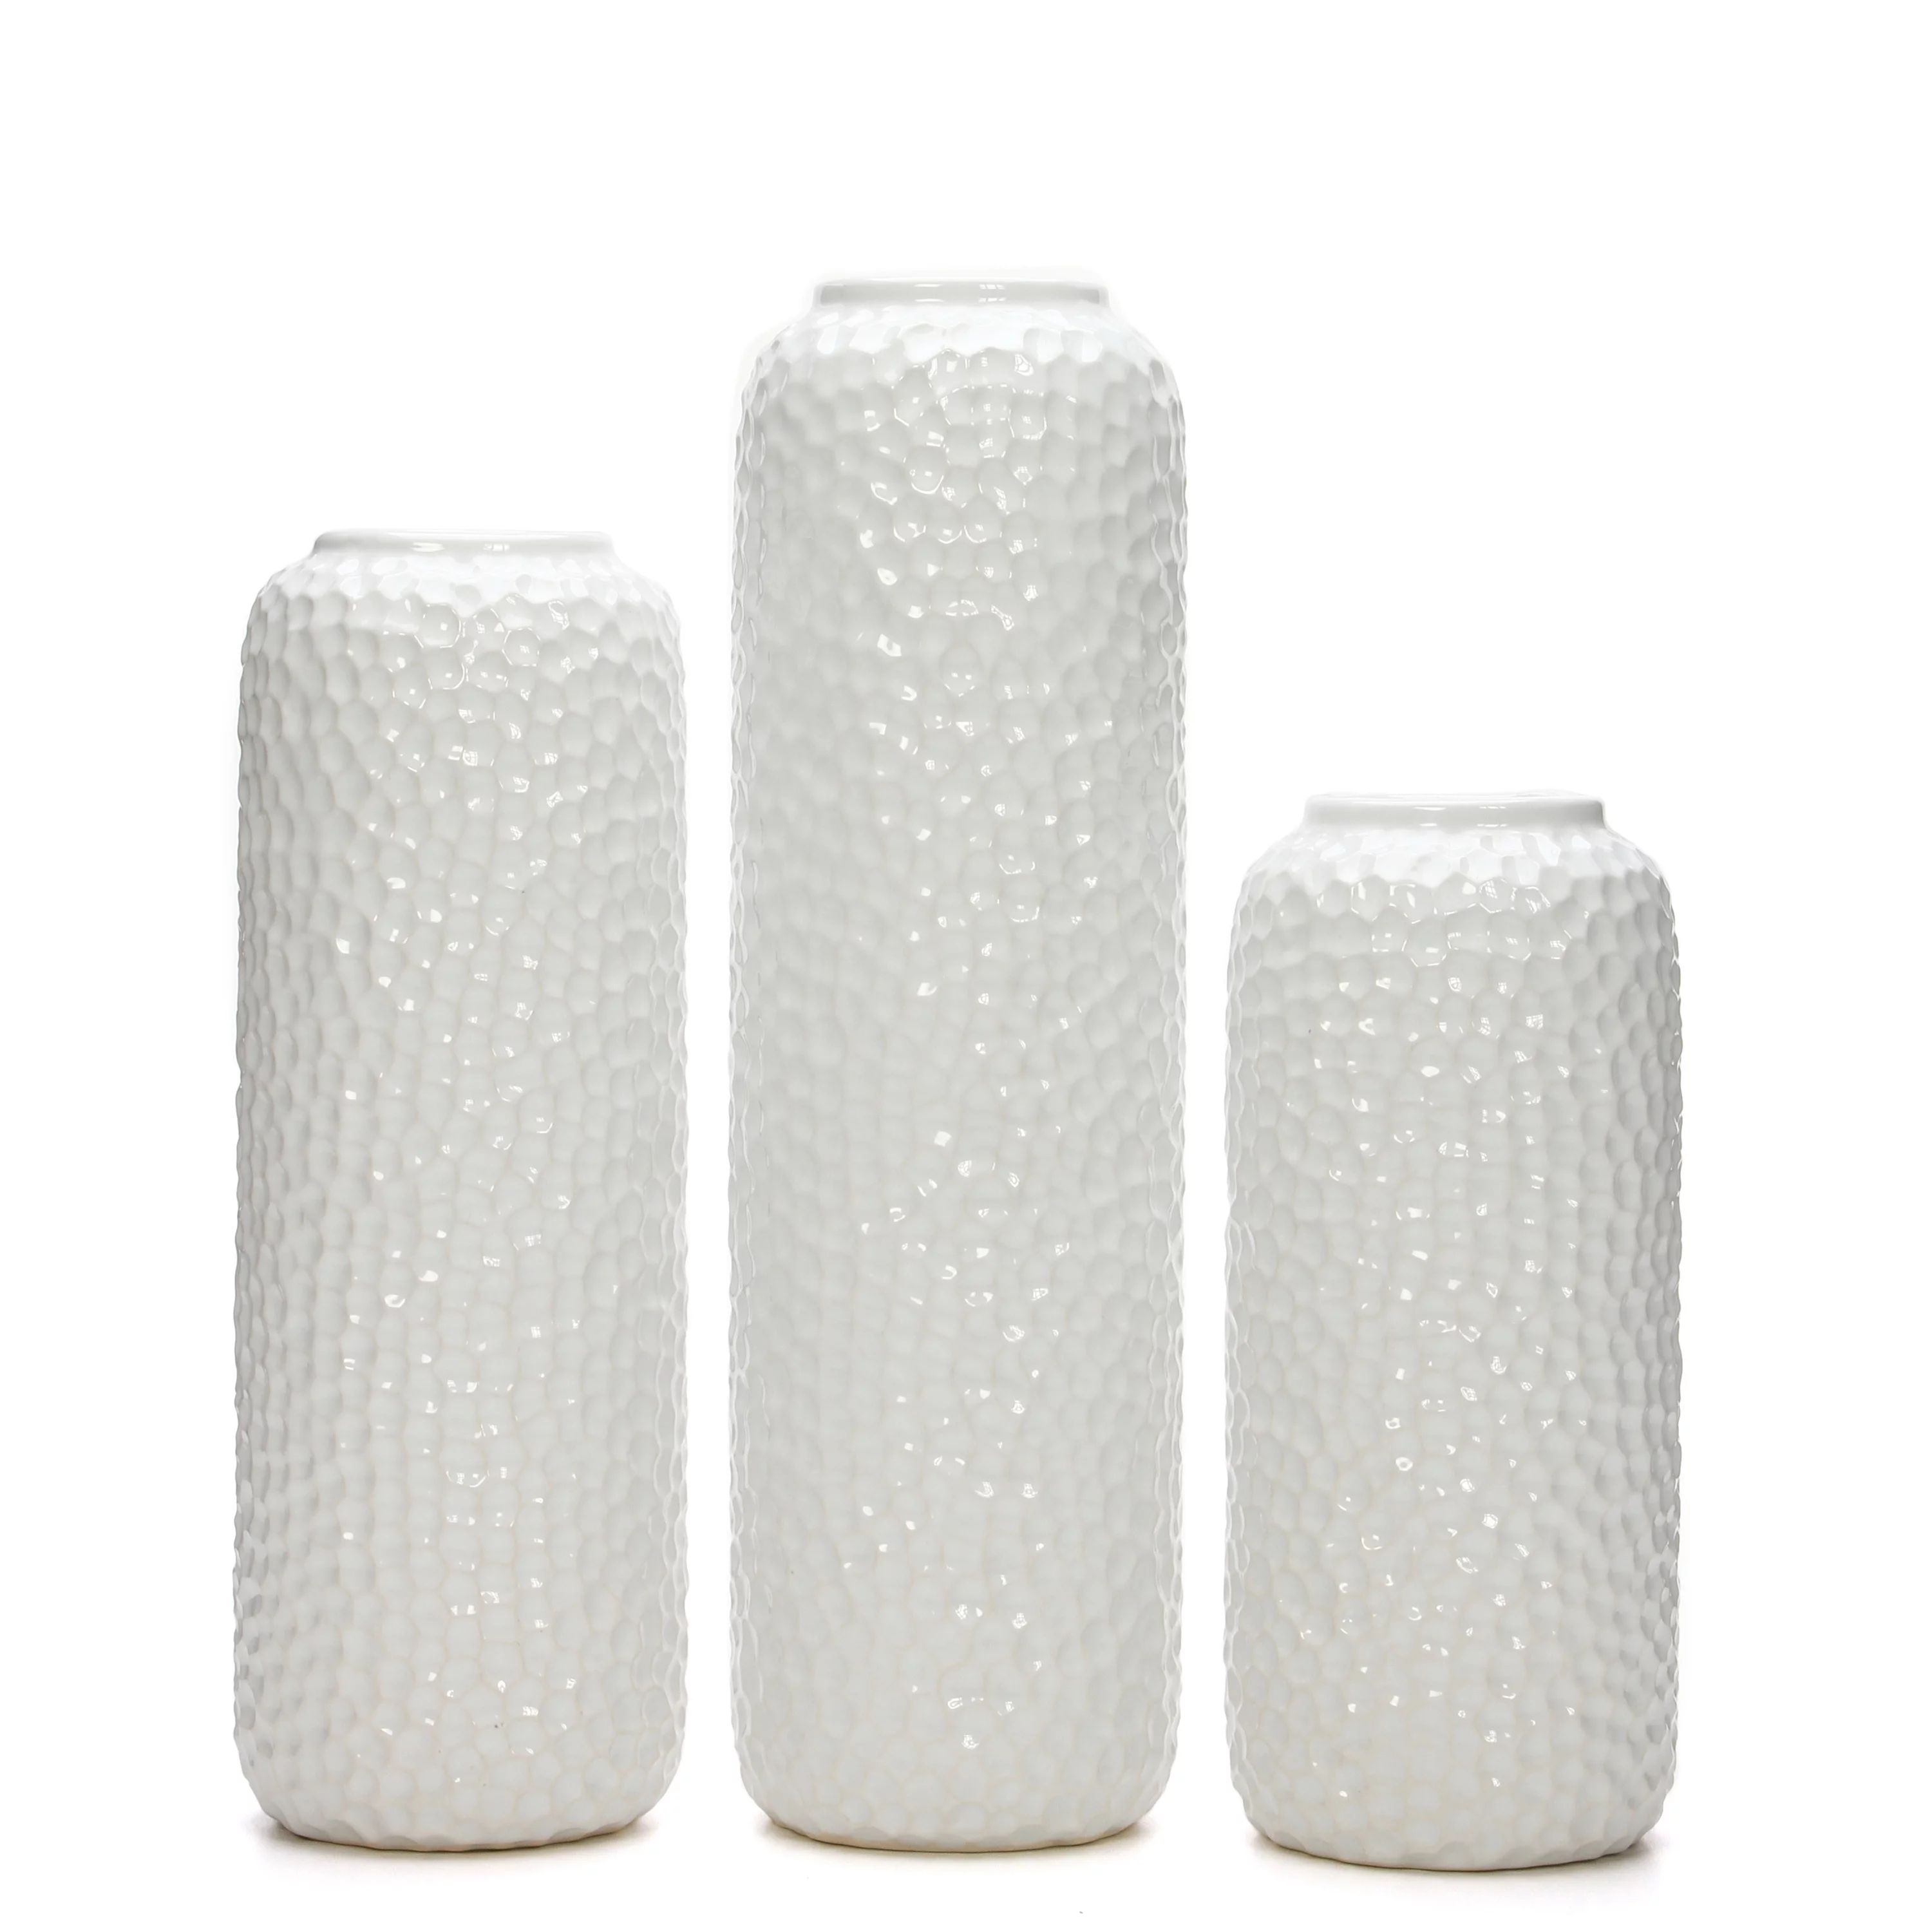 Hosley's Set of 3, White Ceramic Honeycomb Vases - Walmart.com | Walmart (US)